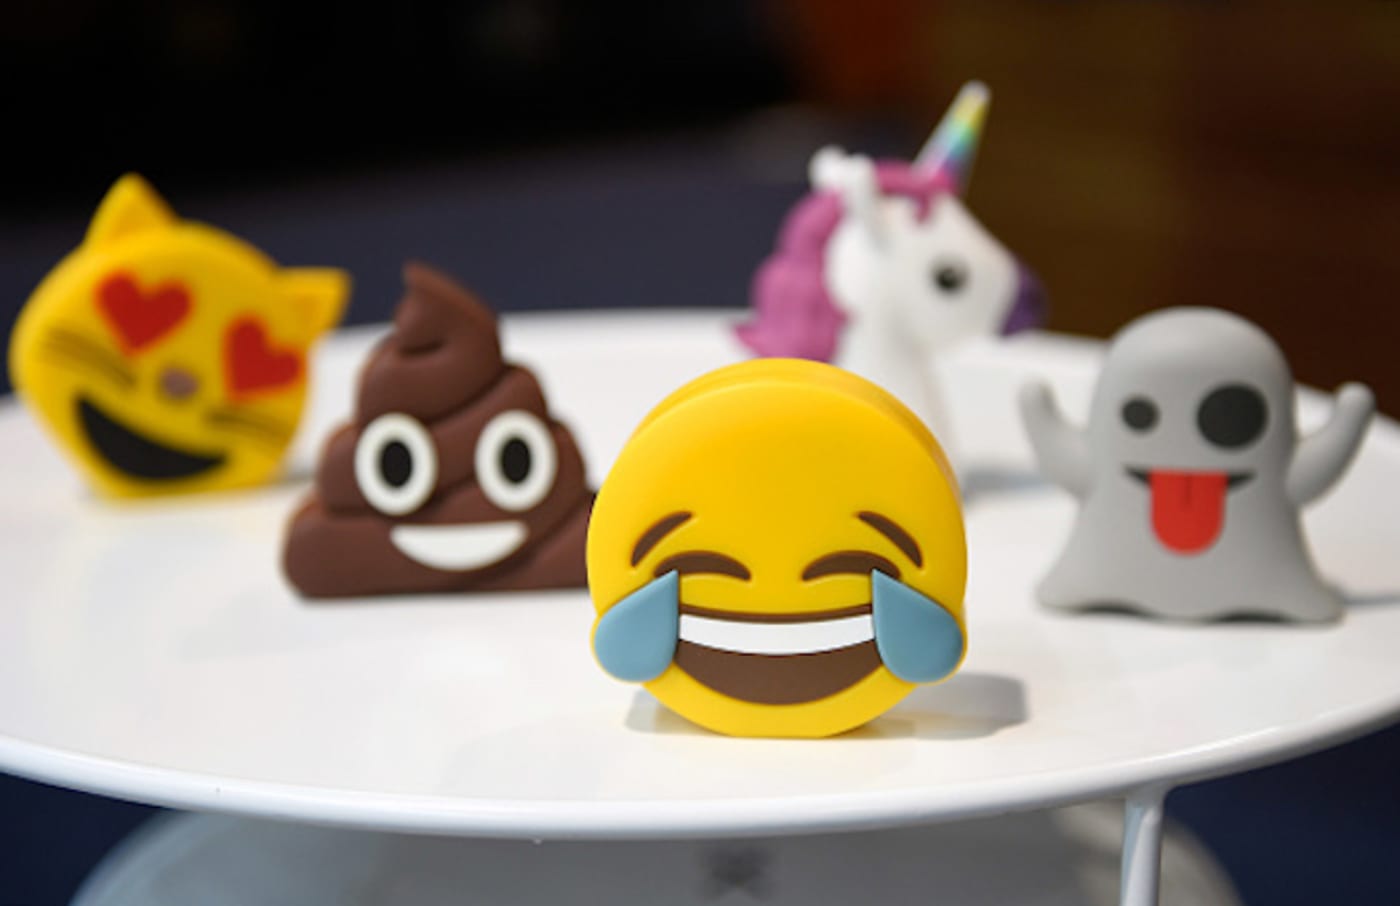 Batteries designed as emojis